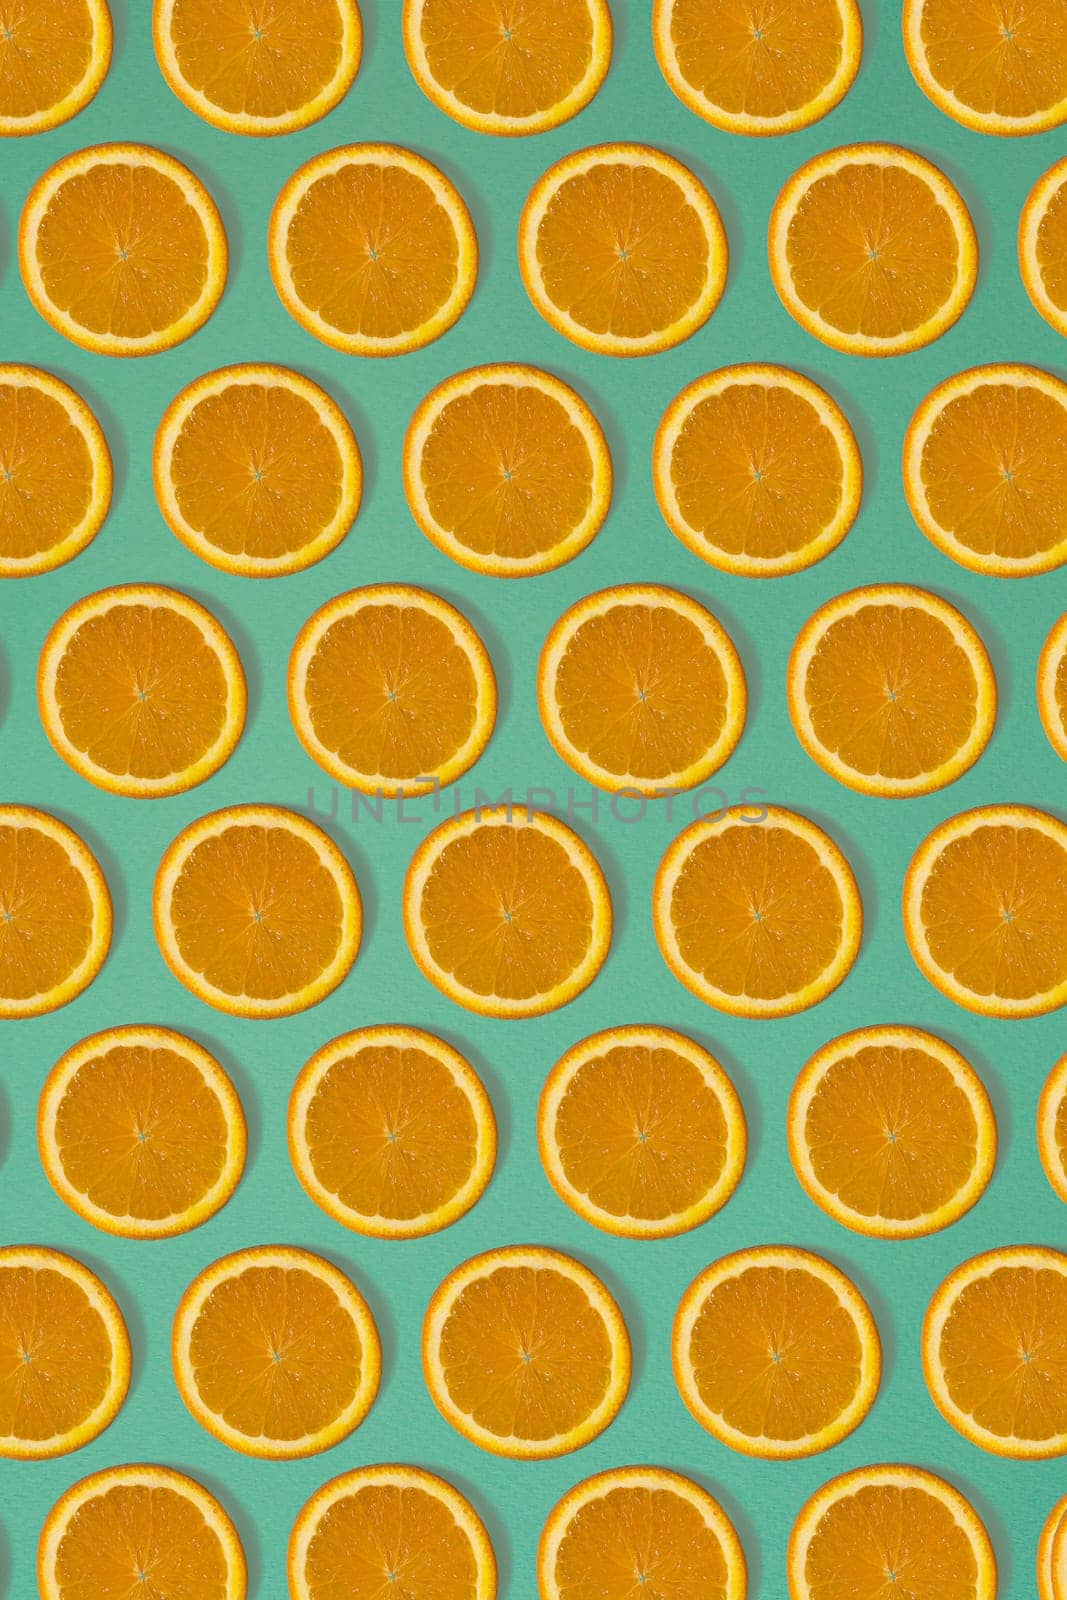 Fruit citrus seamless pattern. Orange tile texture.